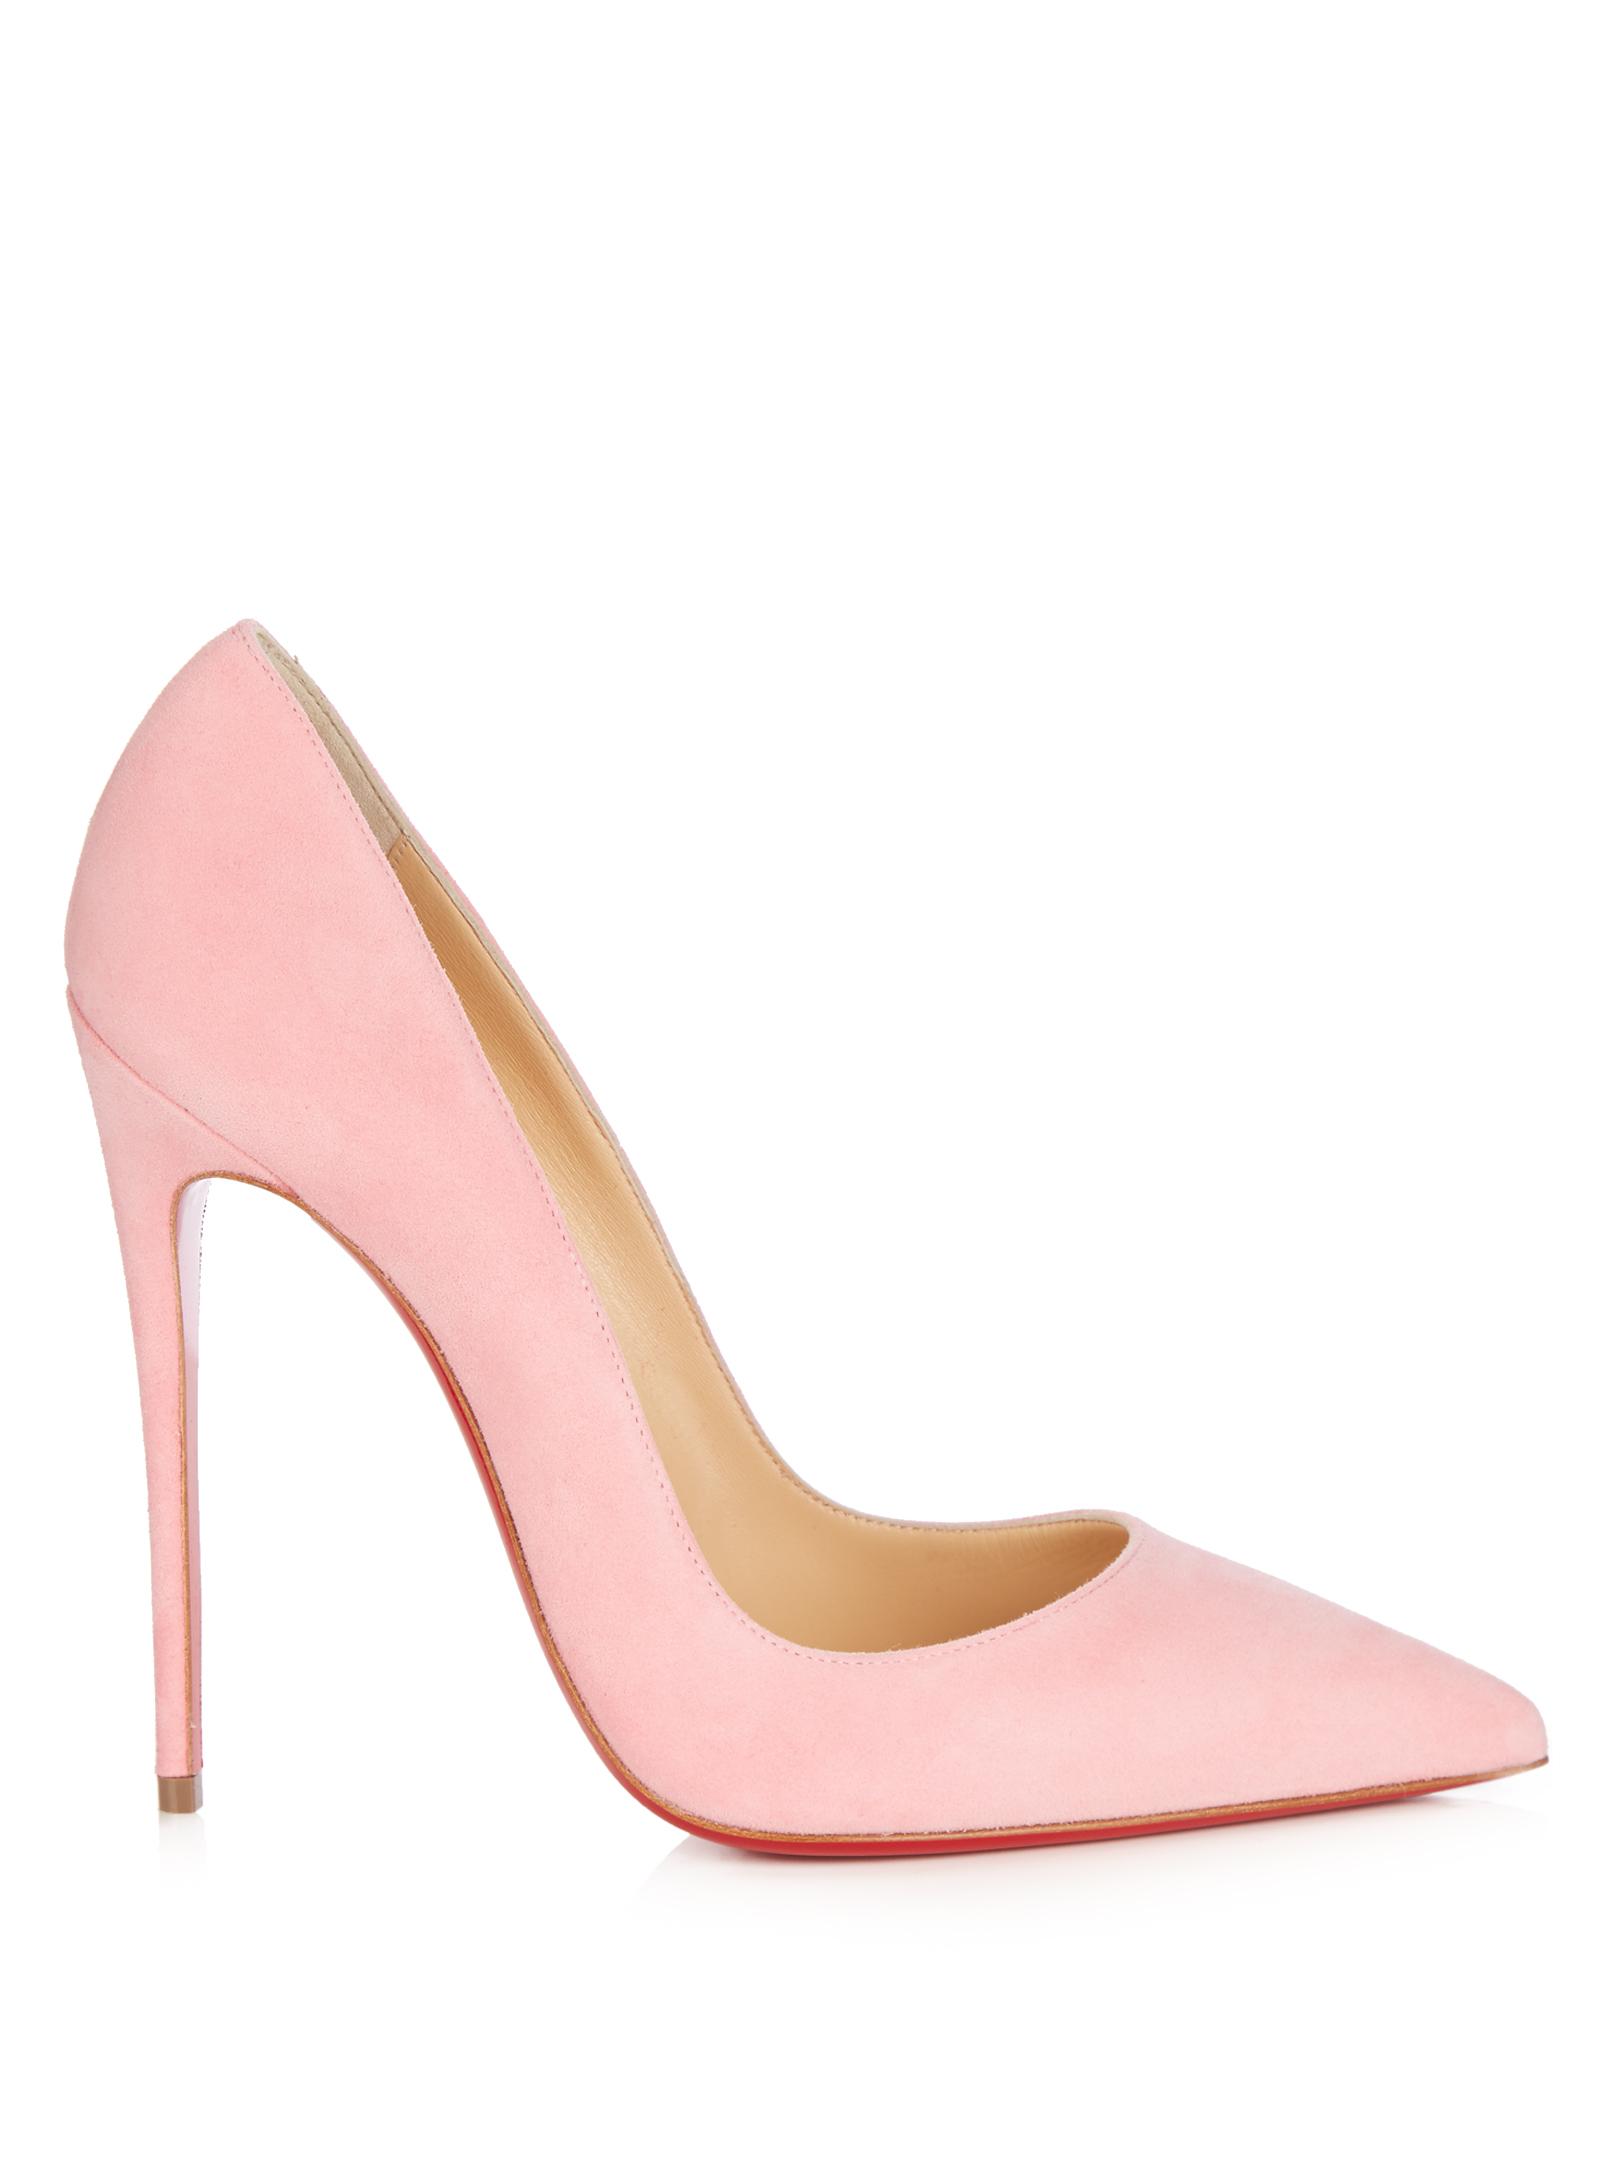 Christian Louboutin Pink Shoes